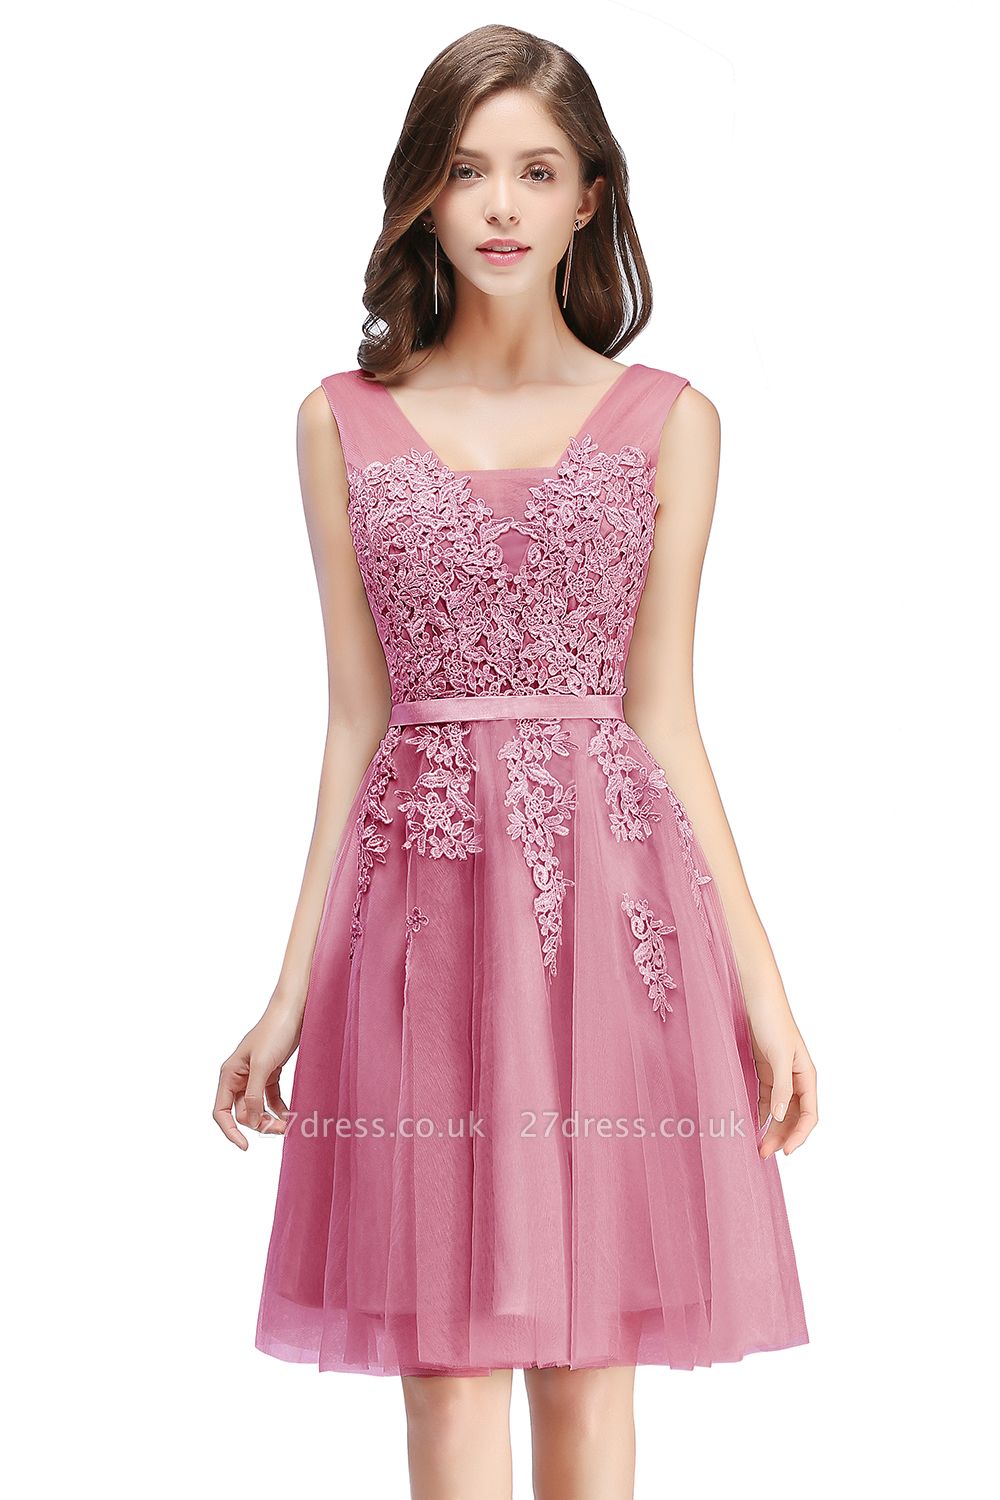 Beautiful Sleeveless lace-up Short homecoming Dress UK Lace Appliques Tulle BA3782